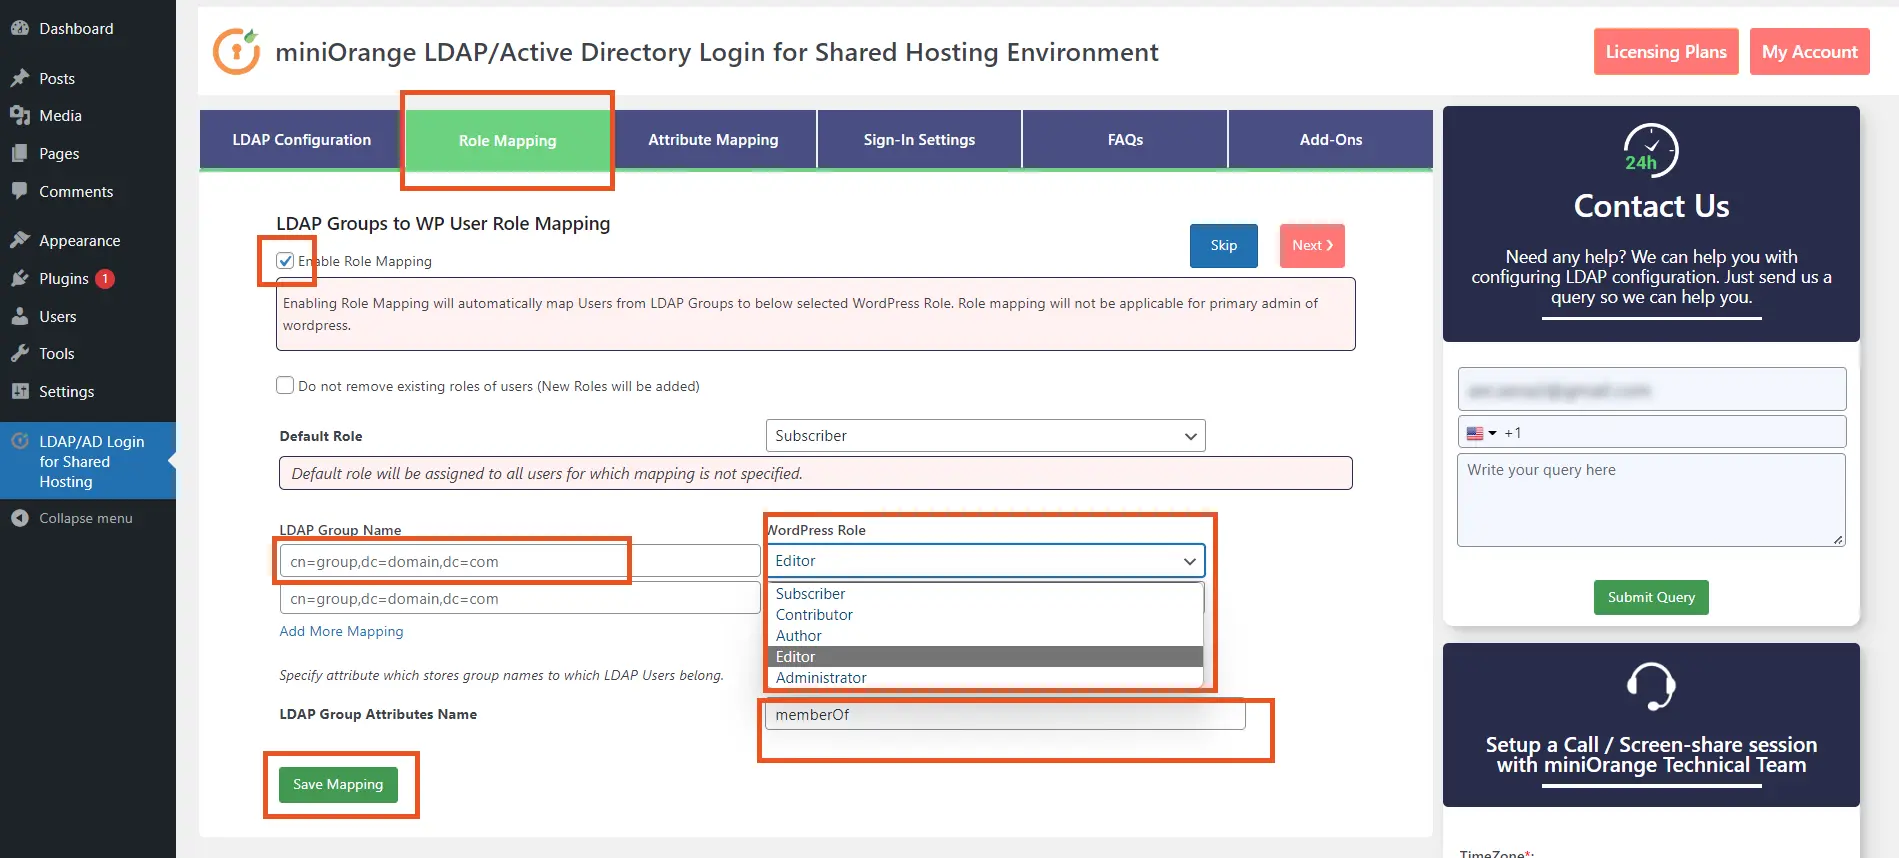 WordPress miniOrange LDAP/AD login for shared hosting environment role mapping configuration